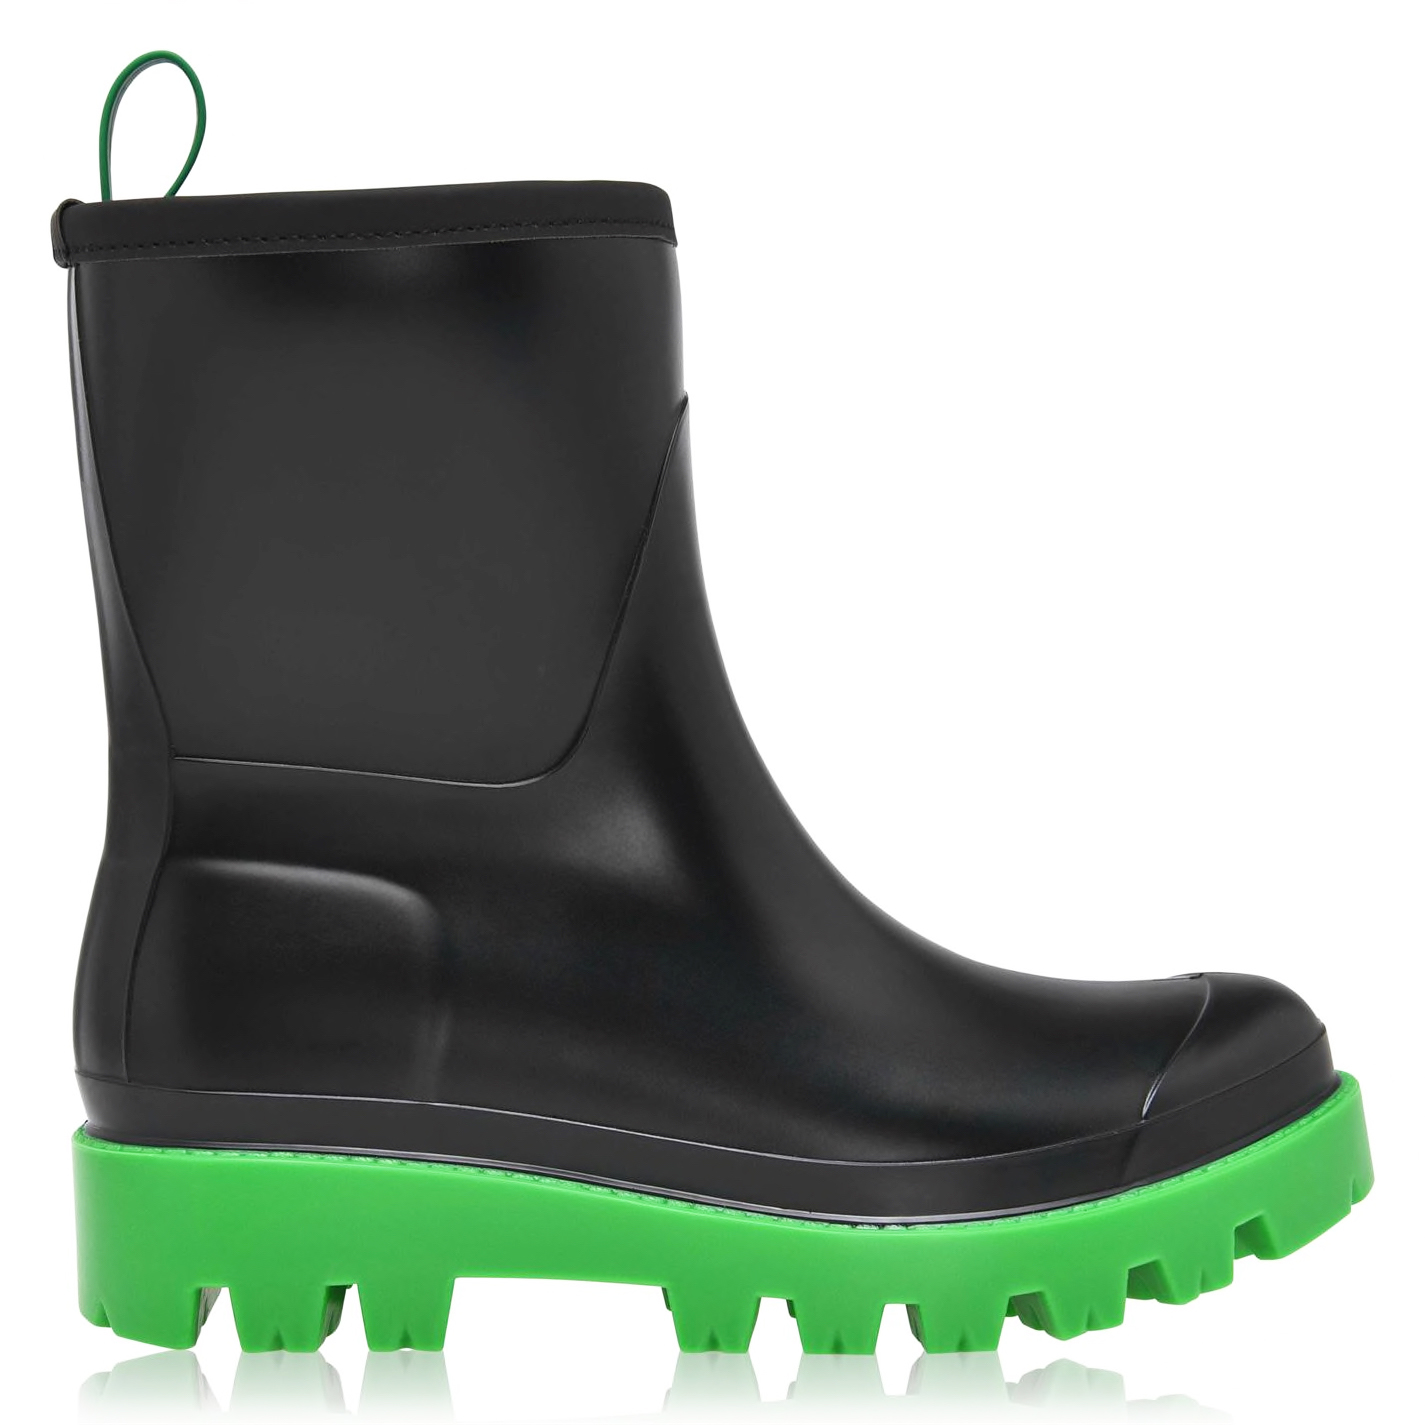 Giove Black/Green Wellington Rain Boots